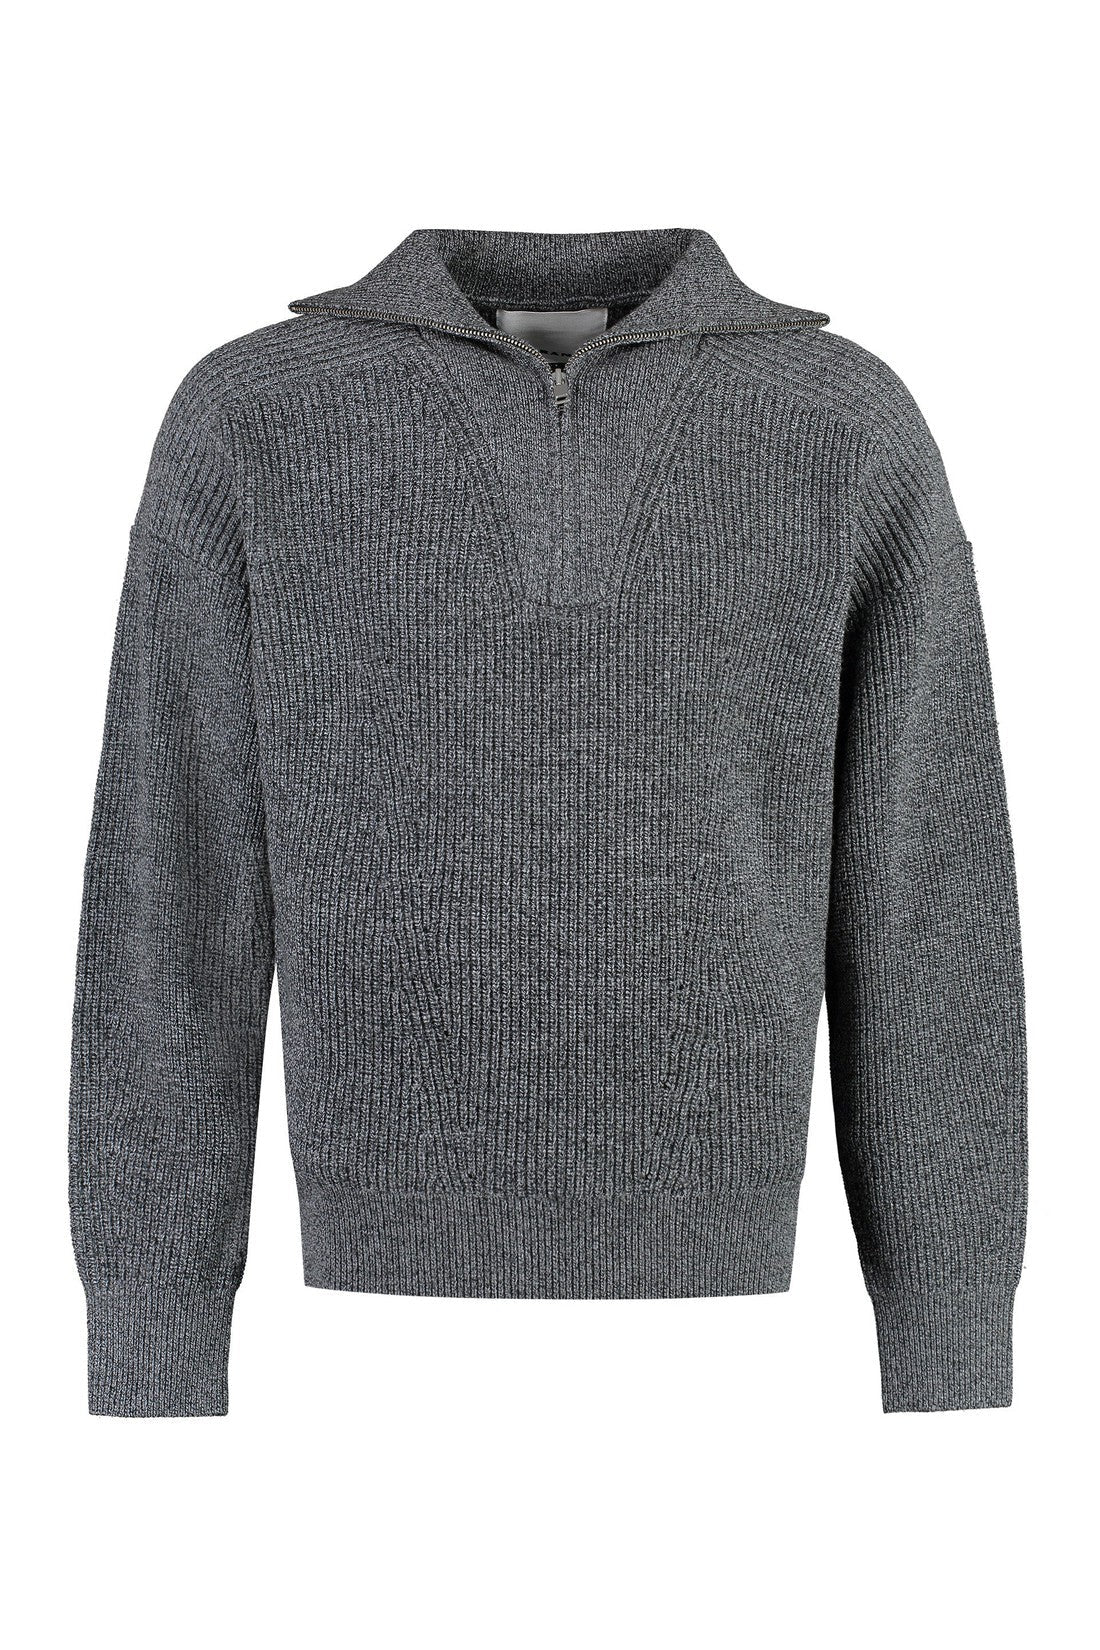 Marant-OUTLET-SALE-Benny wool turtleneck sweater-ARCHIVIST